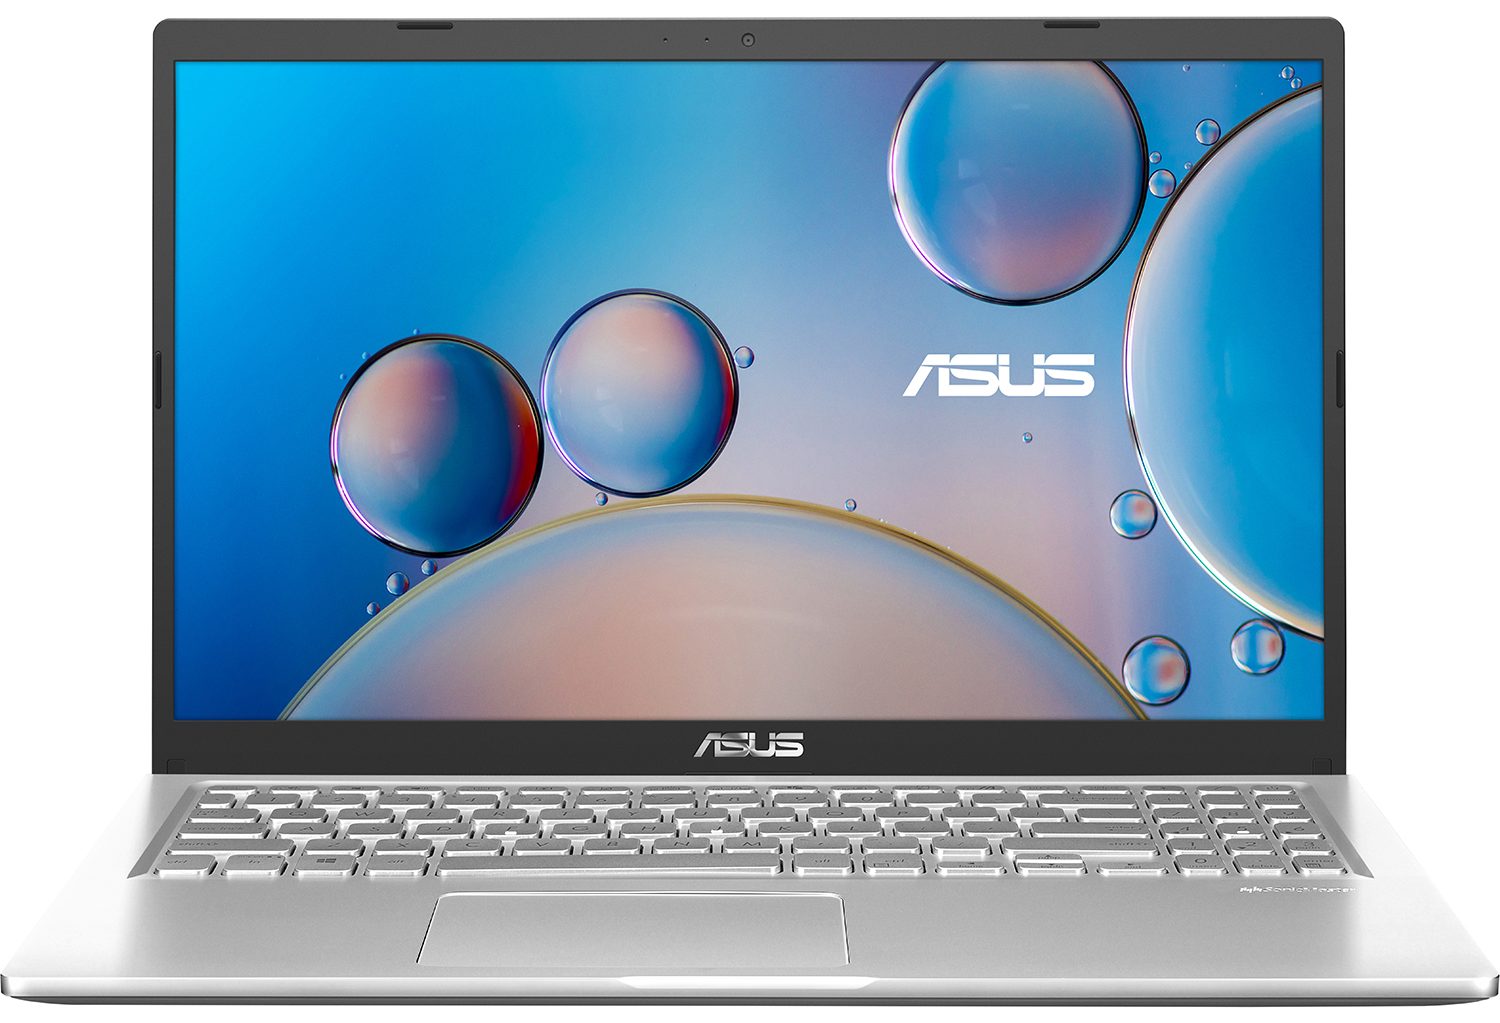 ASUS VivoBook 15 X515 i7-1165G7 · Xe Graphics G7 · 15.6”, Full HD (1920 x  1080), TN · 512GB SSD · 8GB DDR4 · Windows 10 Home